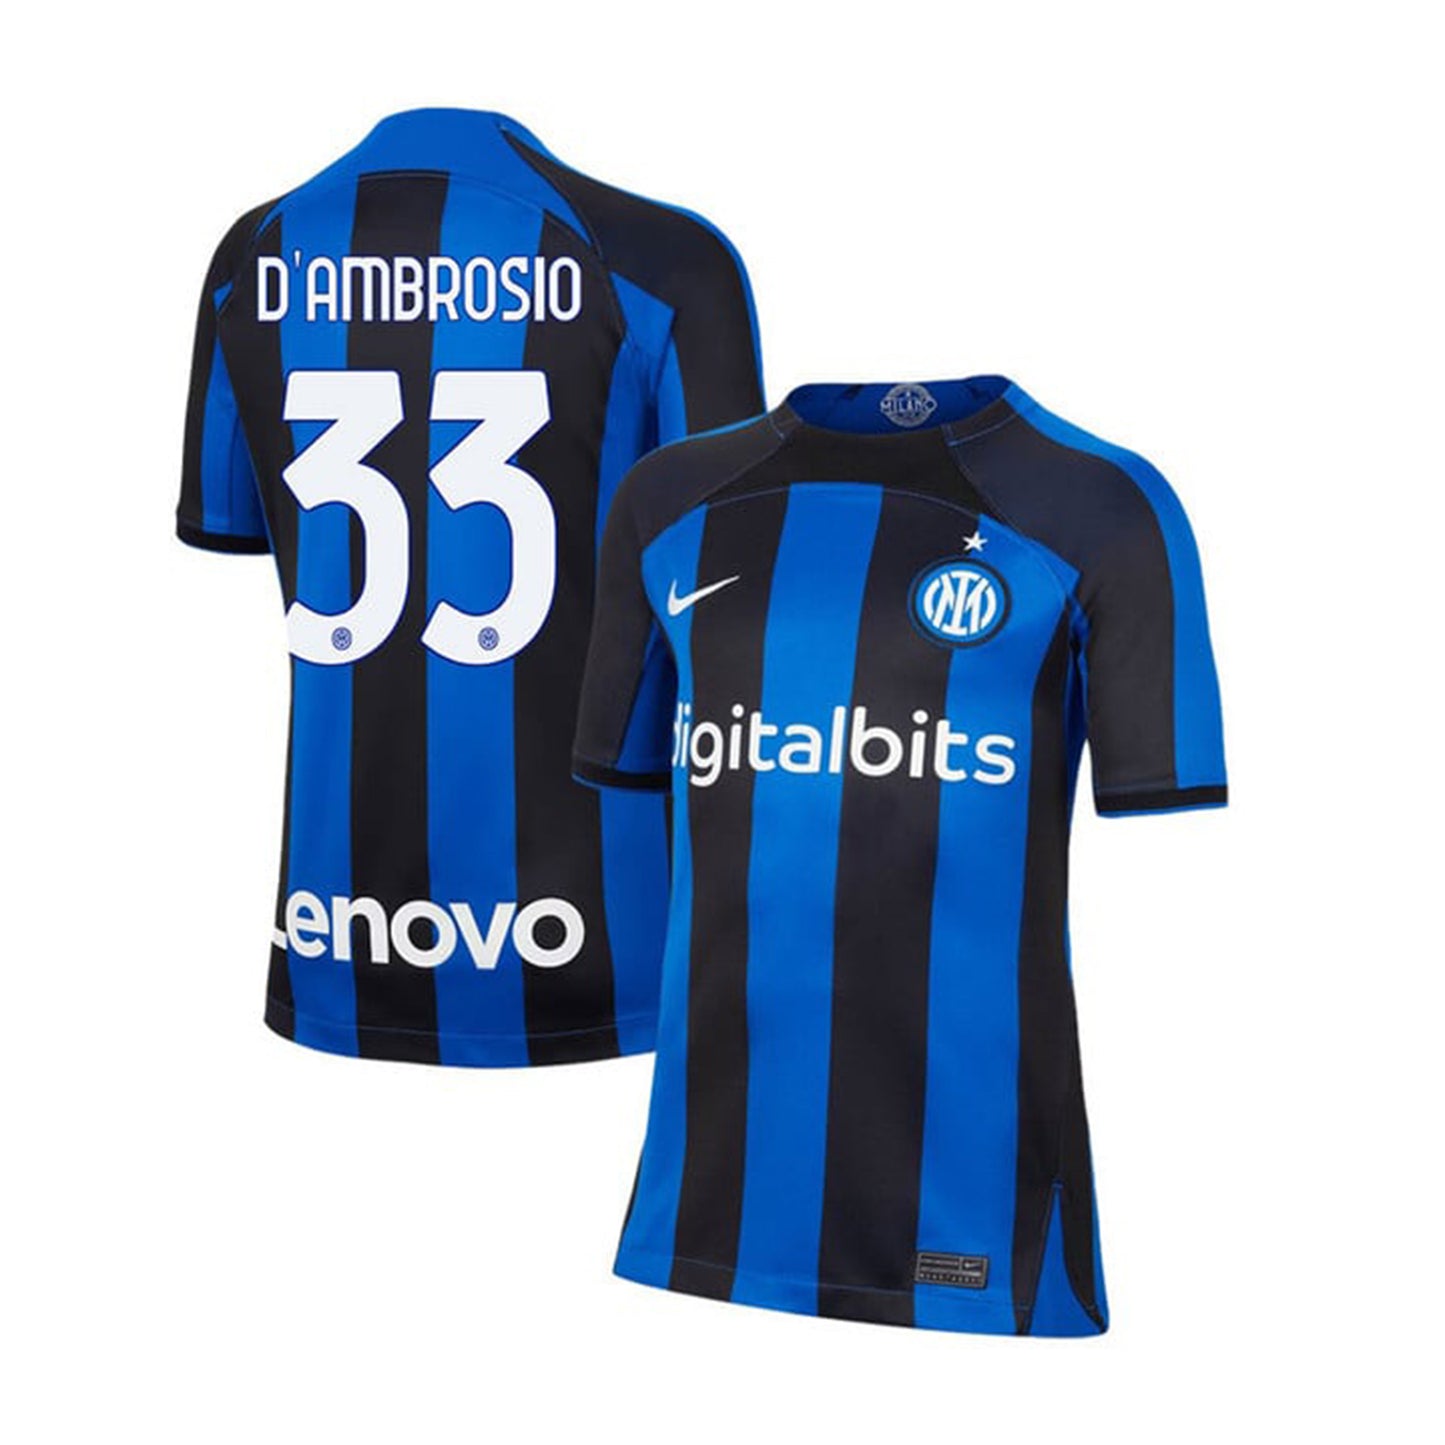 Danilo D'Ambrosio Inter Milan 33 Jersey